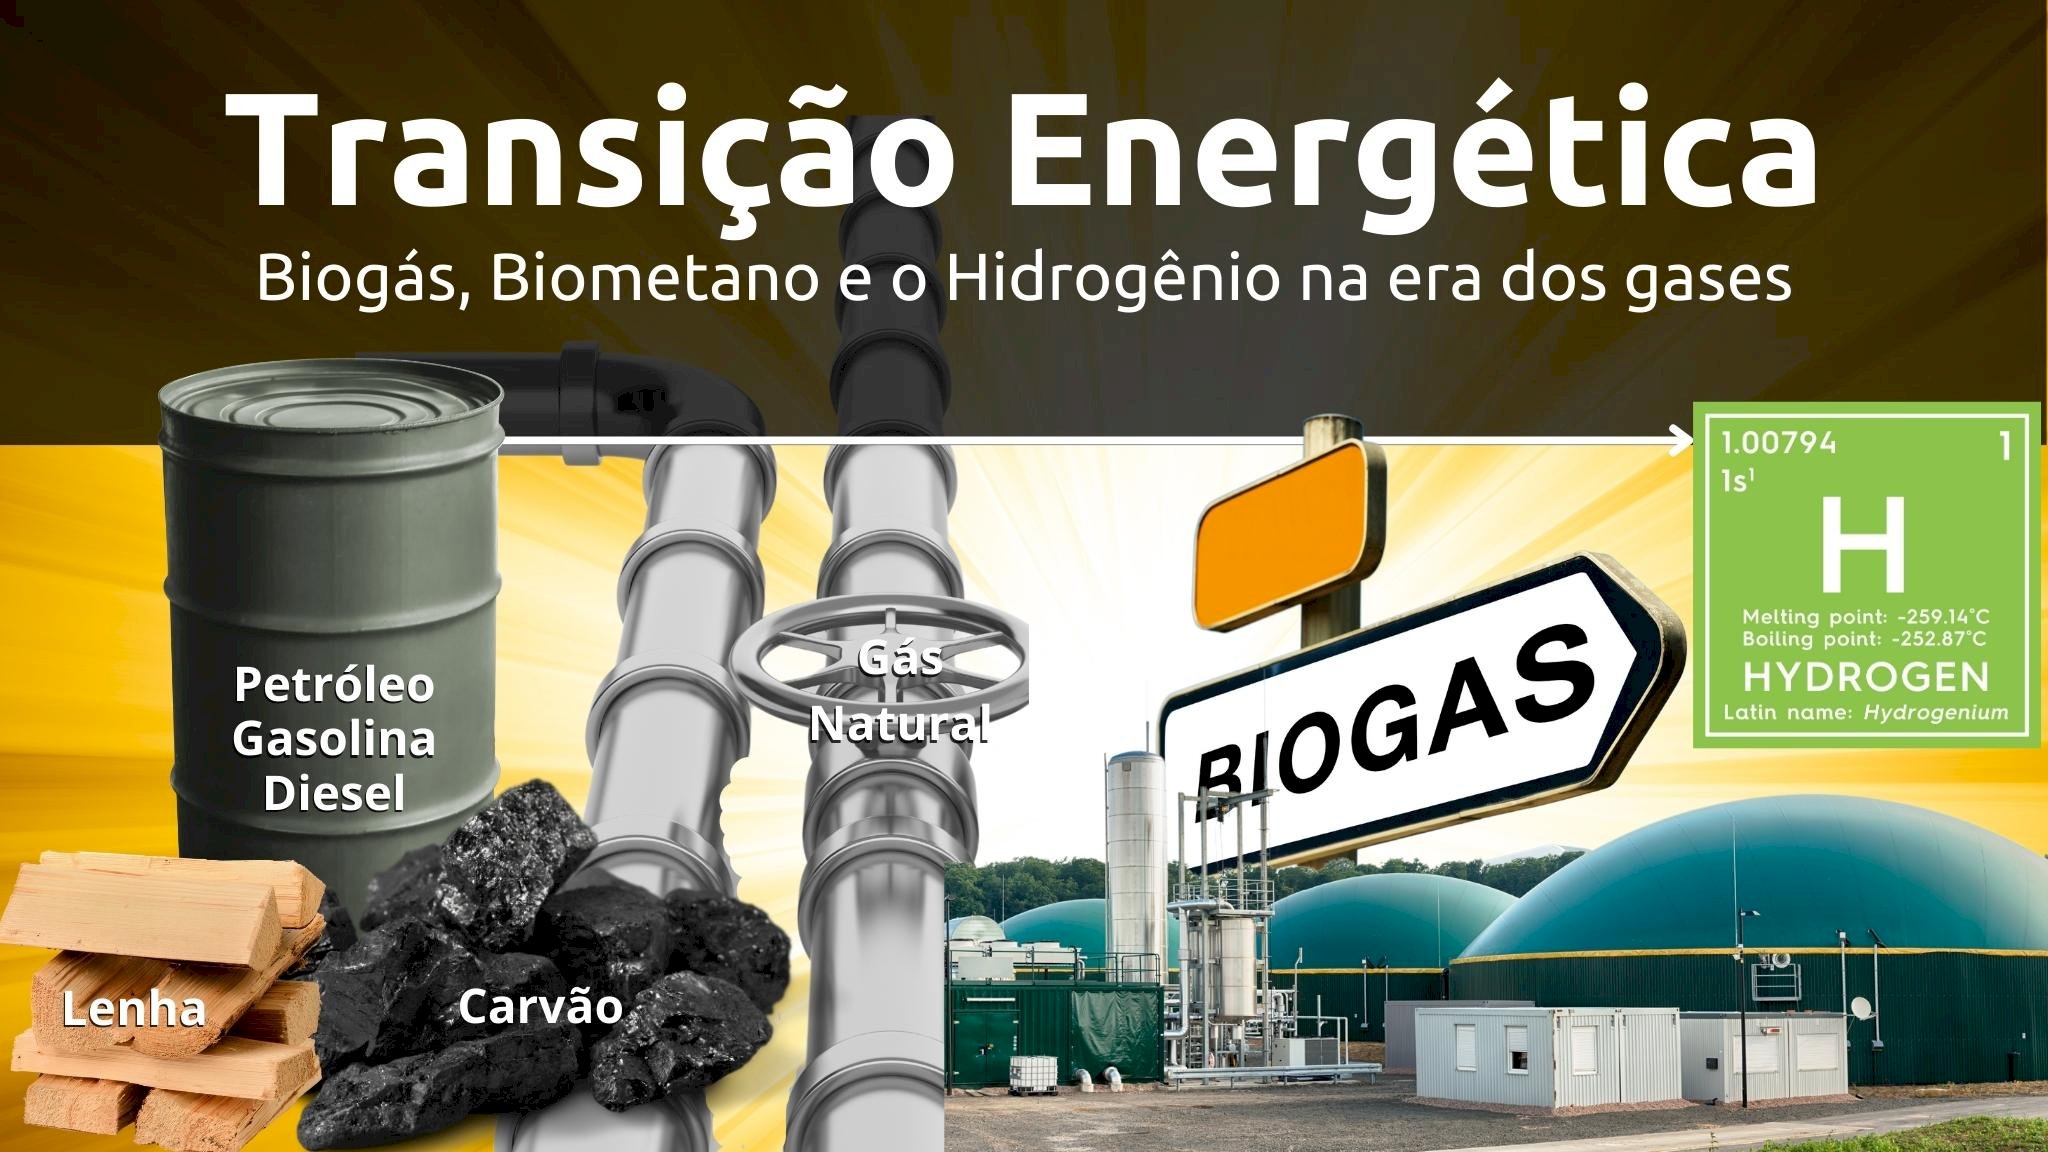 https://energiaebiogas.com.br/uploads/images/image_orig_63a4a39bcc803.jpg